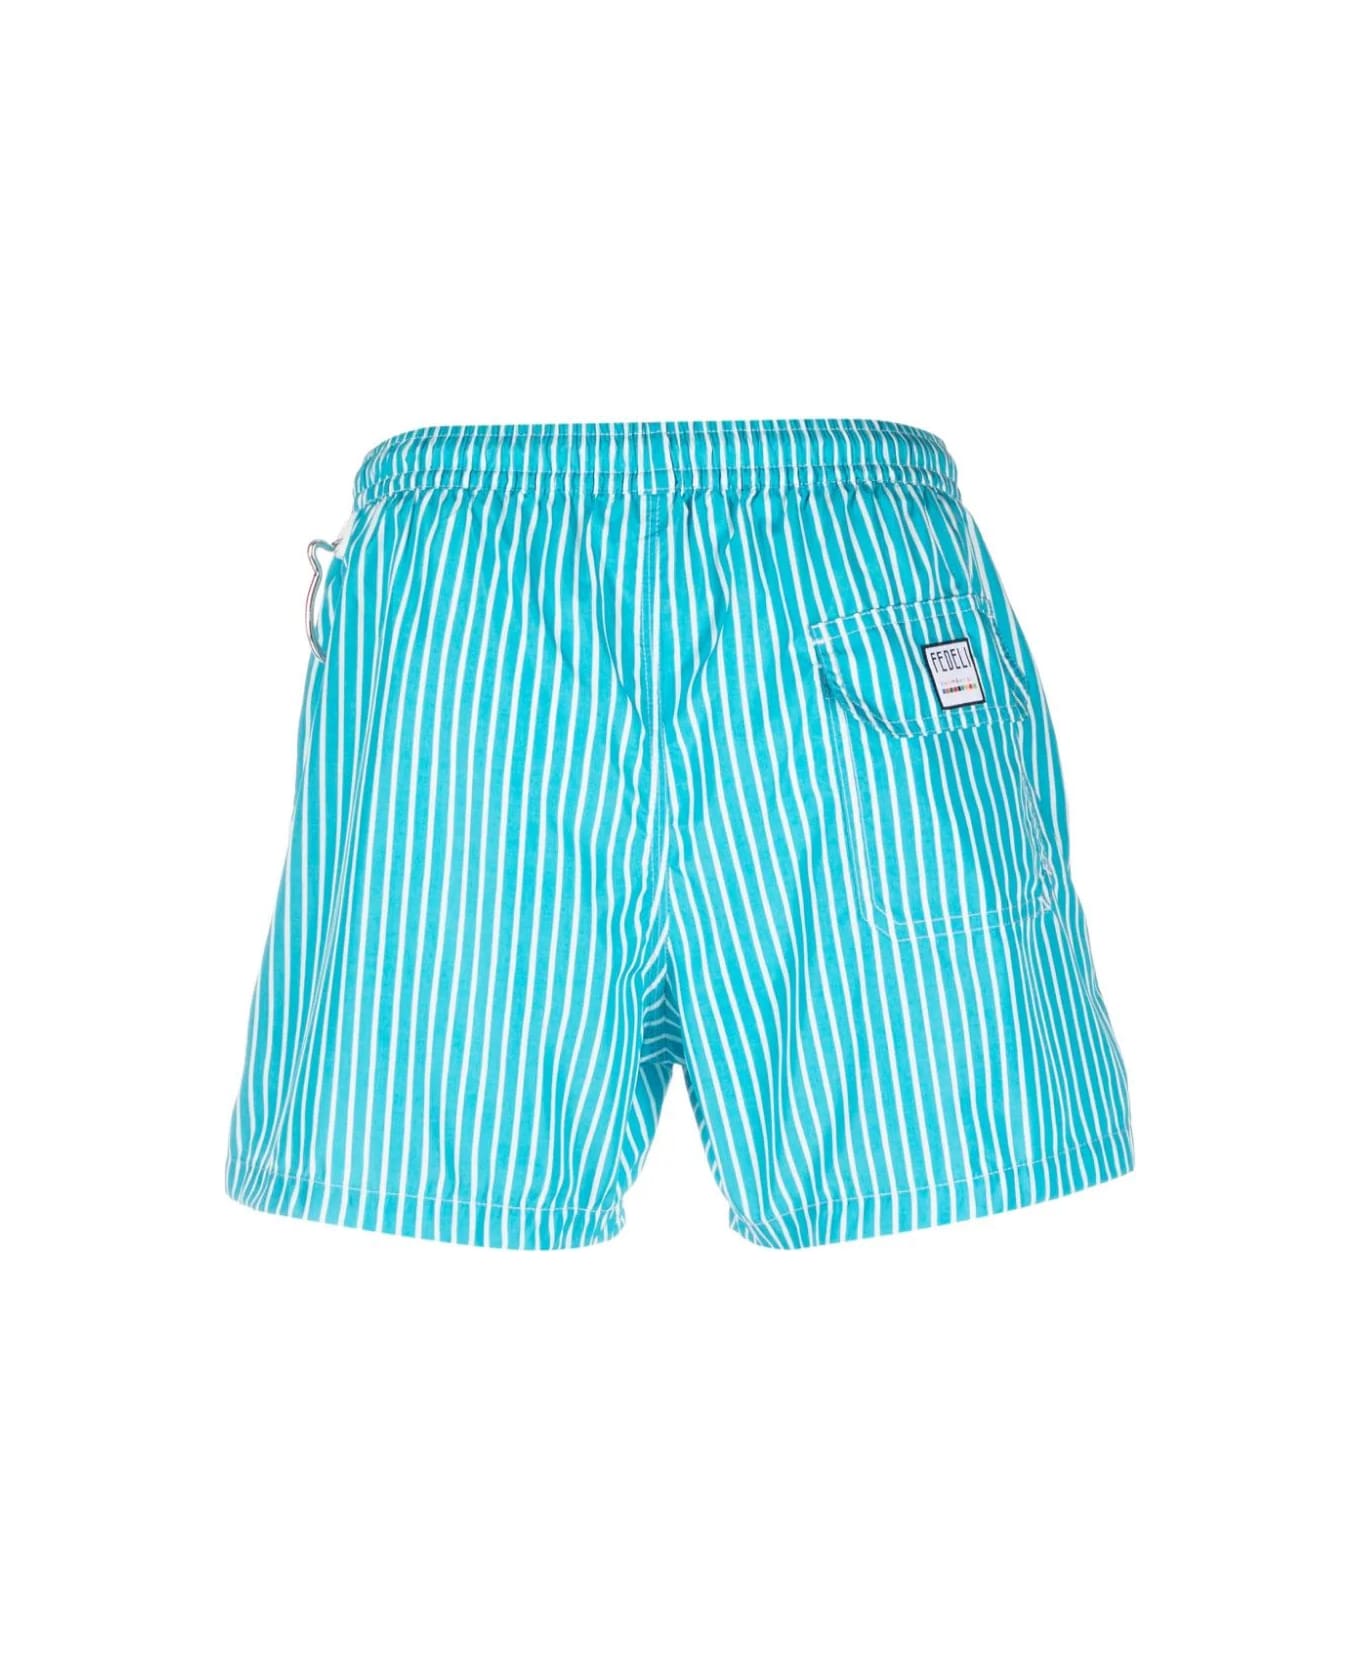 Fedeli Light Blue And White Striped Swim Shorts - Blue